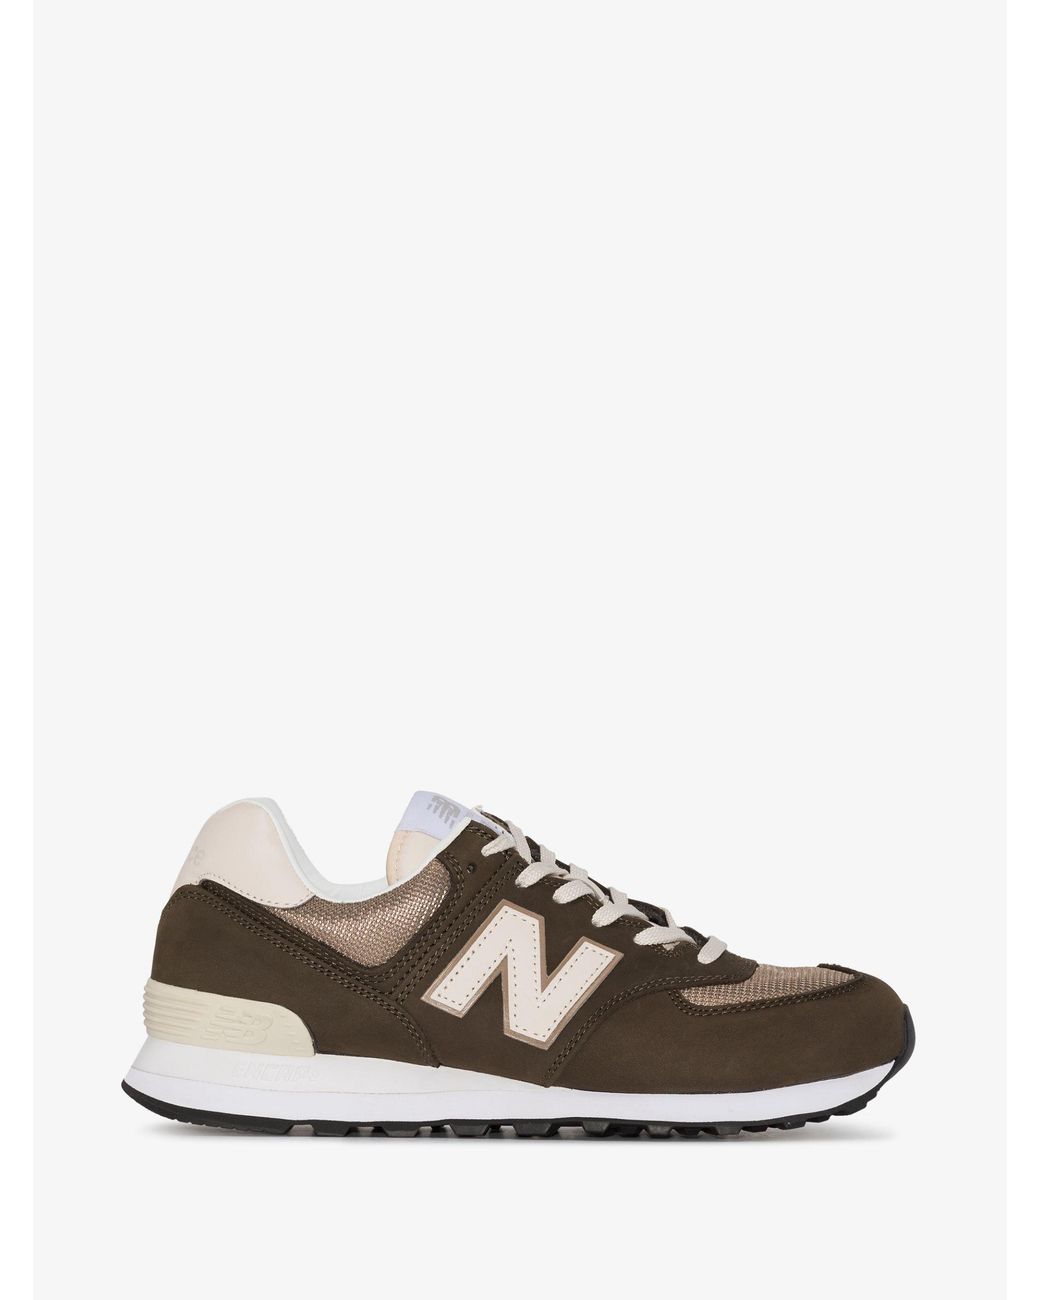 New Balance Suede 574 Nubuck Sneakers in Brown | Lyst